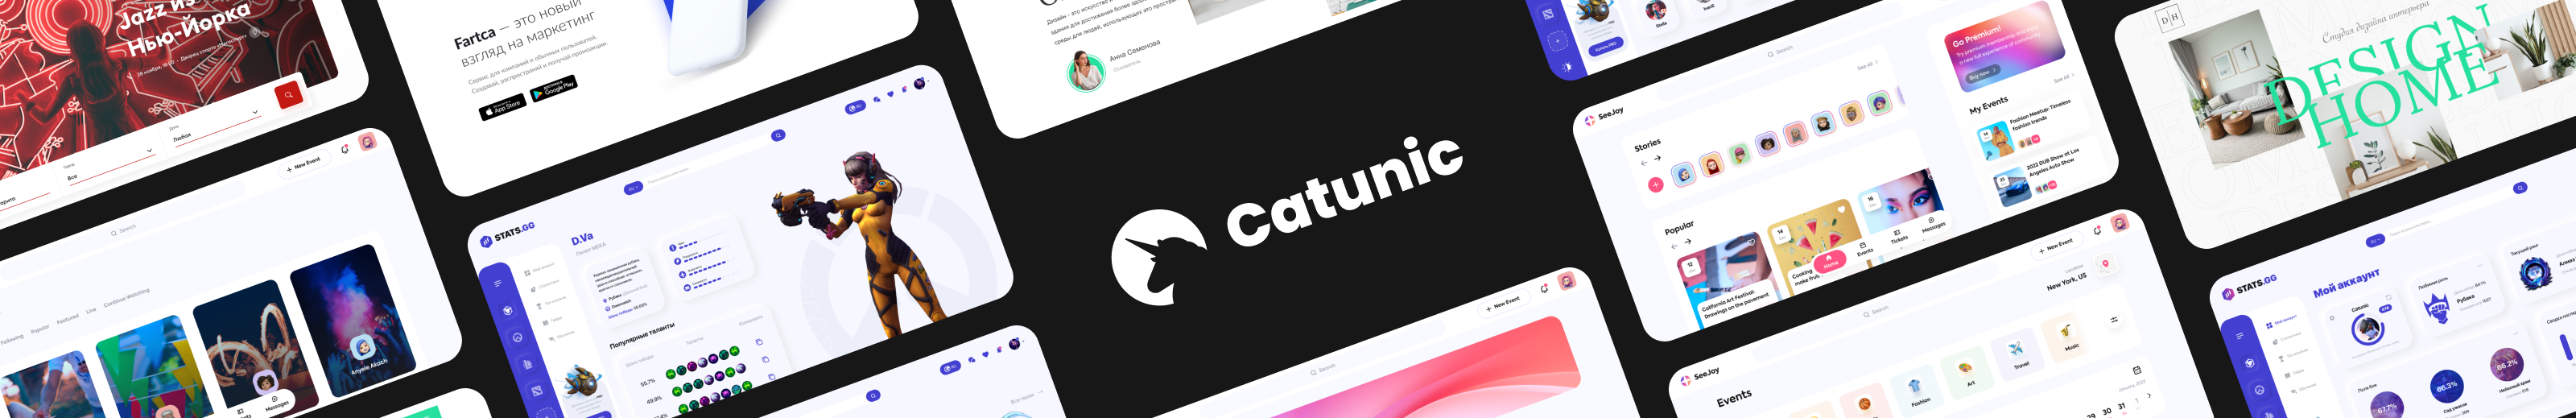 Catrina Catunic profil başlığı